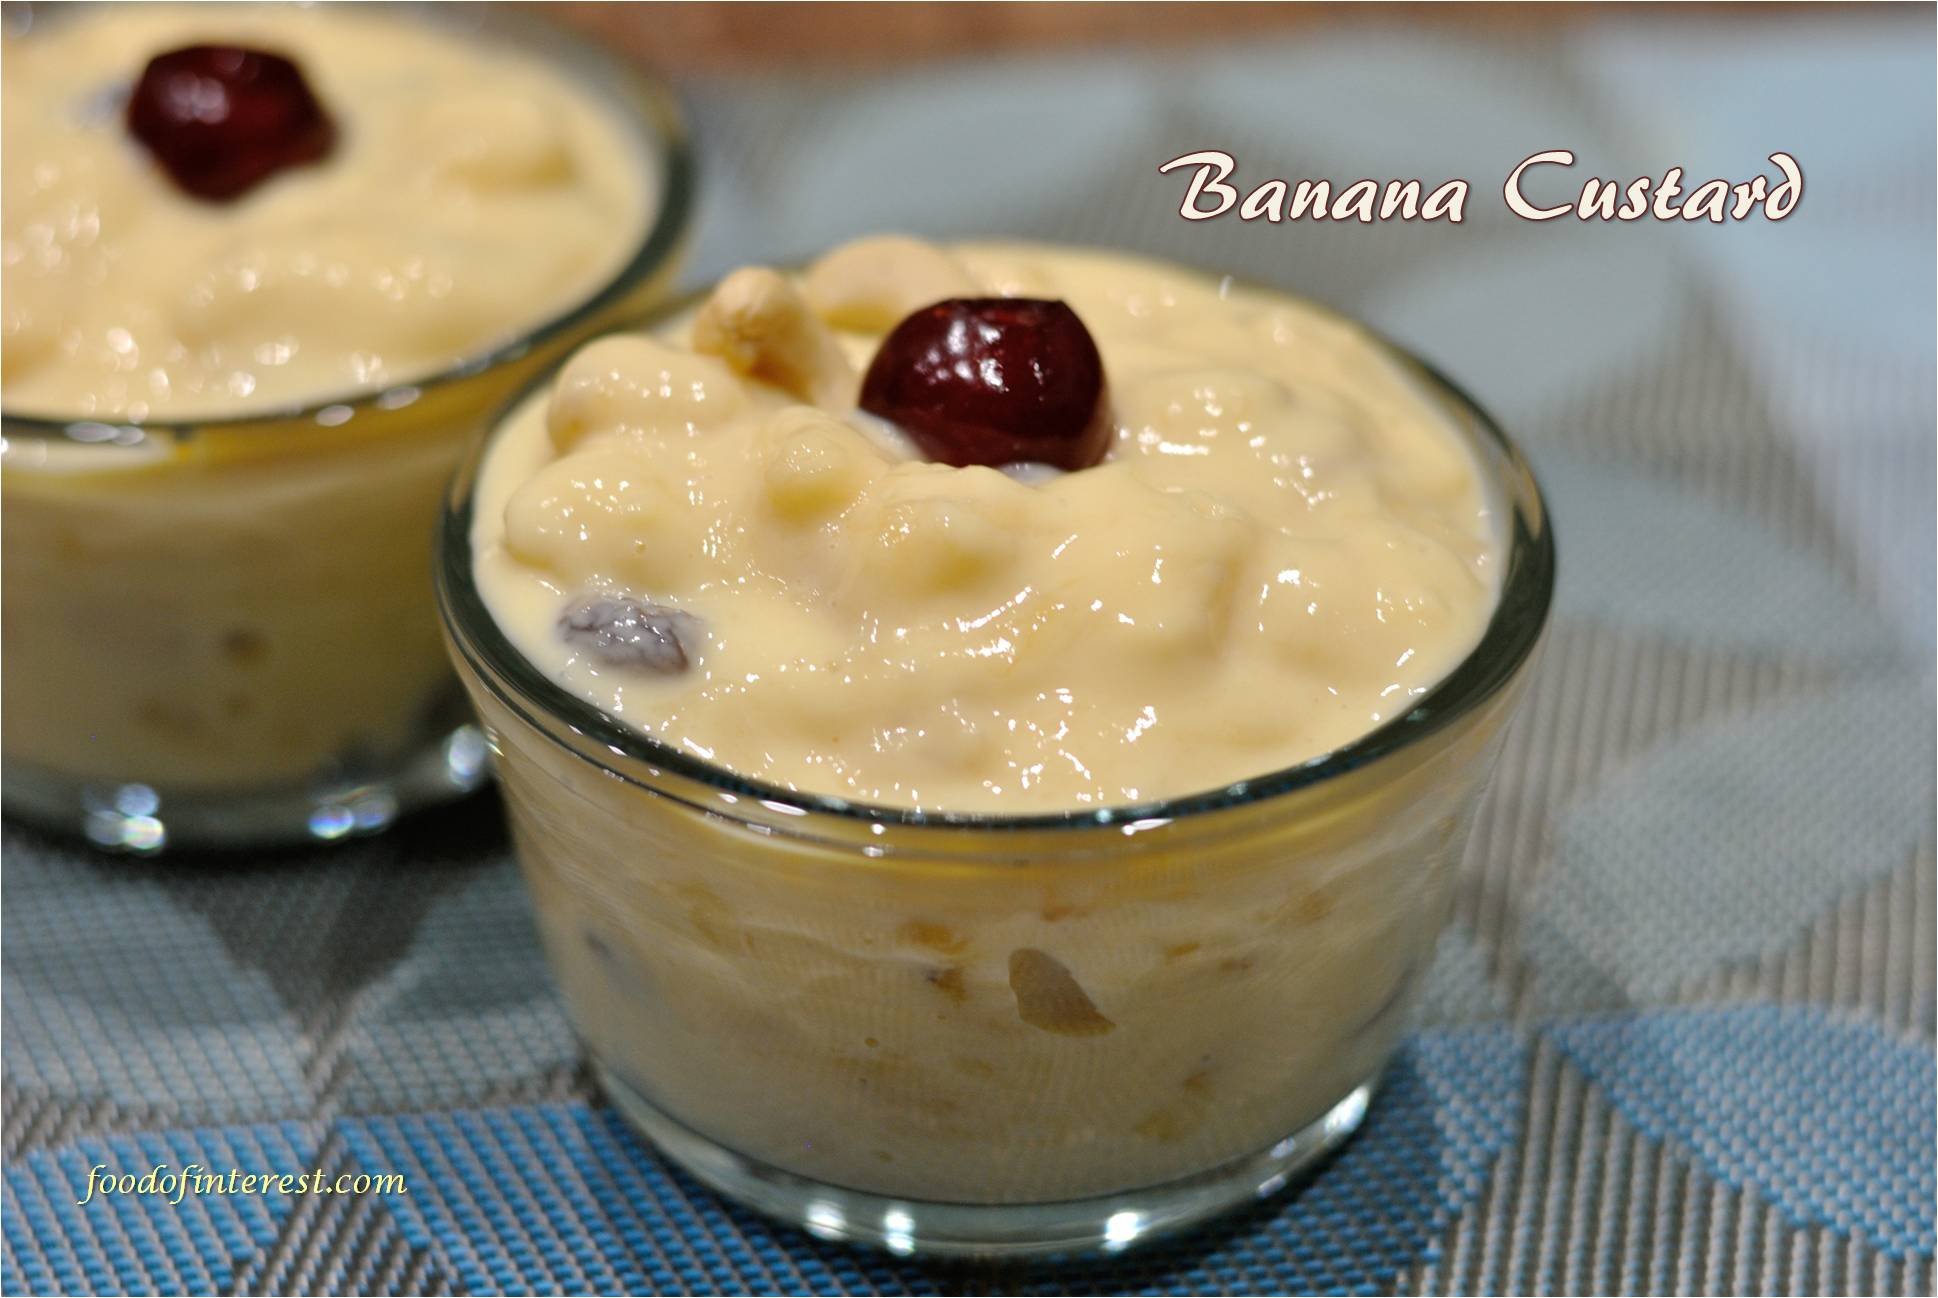 Banana Vanilla Custard With Custard Powder Banana Custard Food Of Interest,Chicken Drumstick Recipes Indian